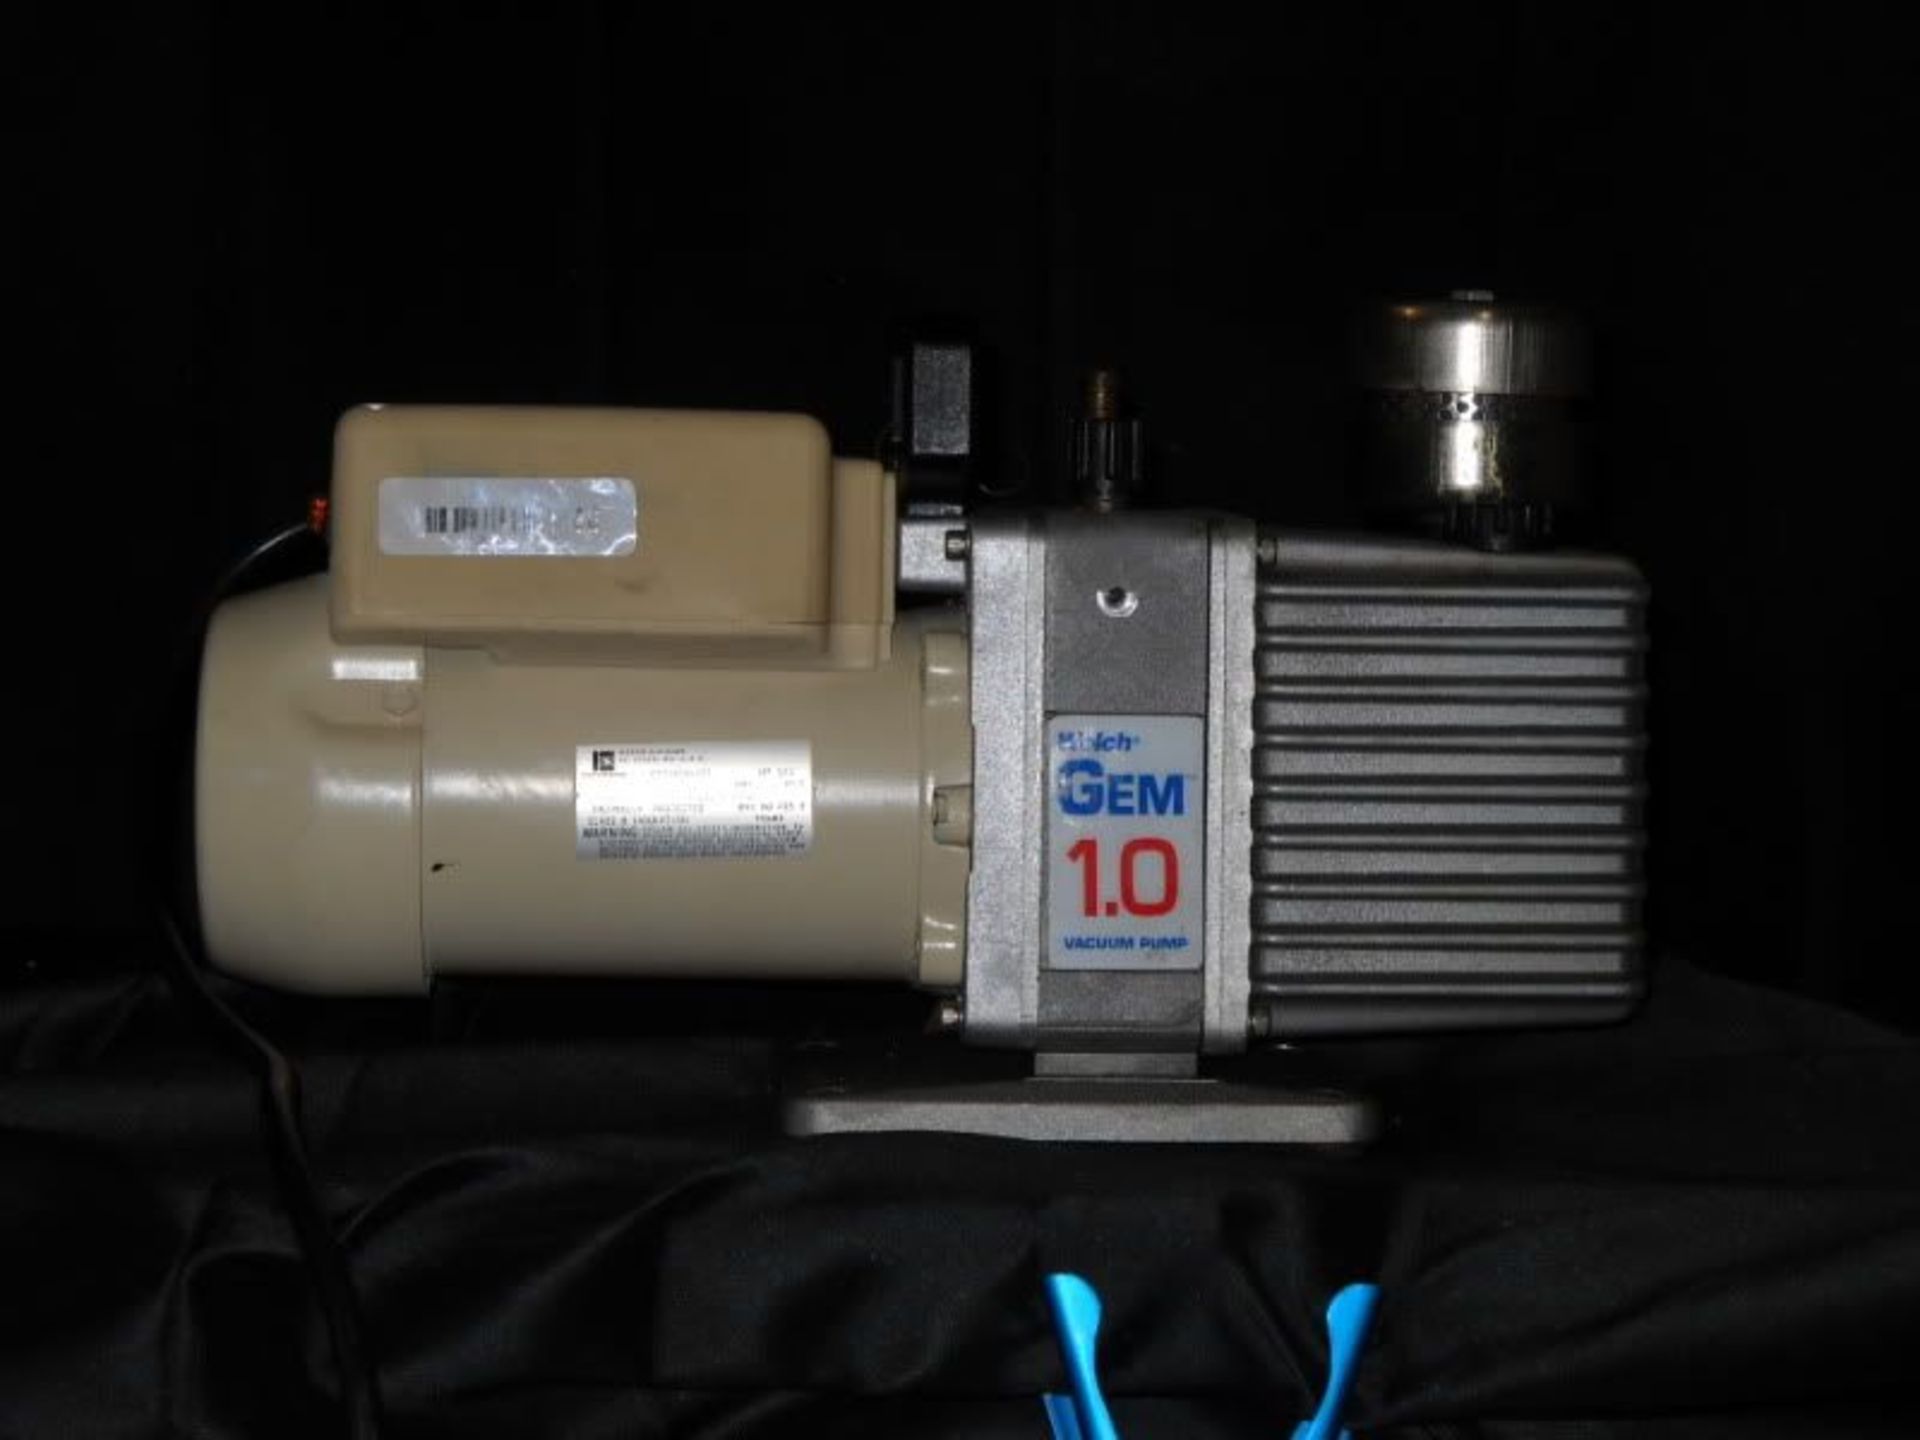 Welch Gem 1.0 Vacuum Pump, Qty 1, 330776312504 - Image 4 of 4